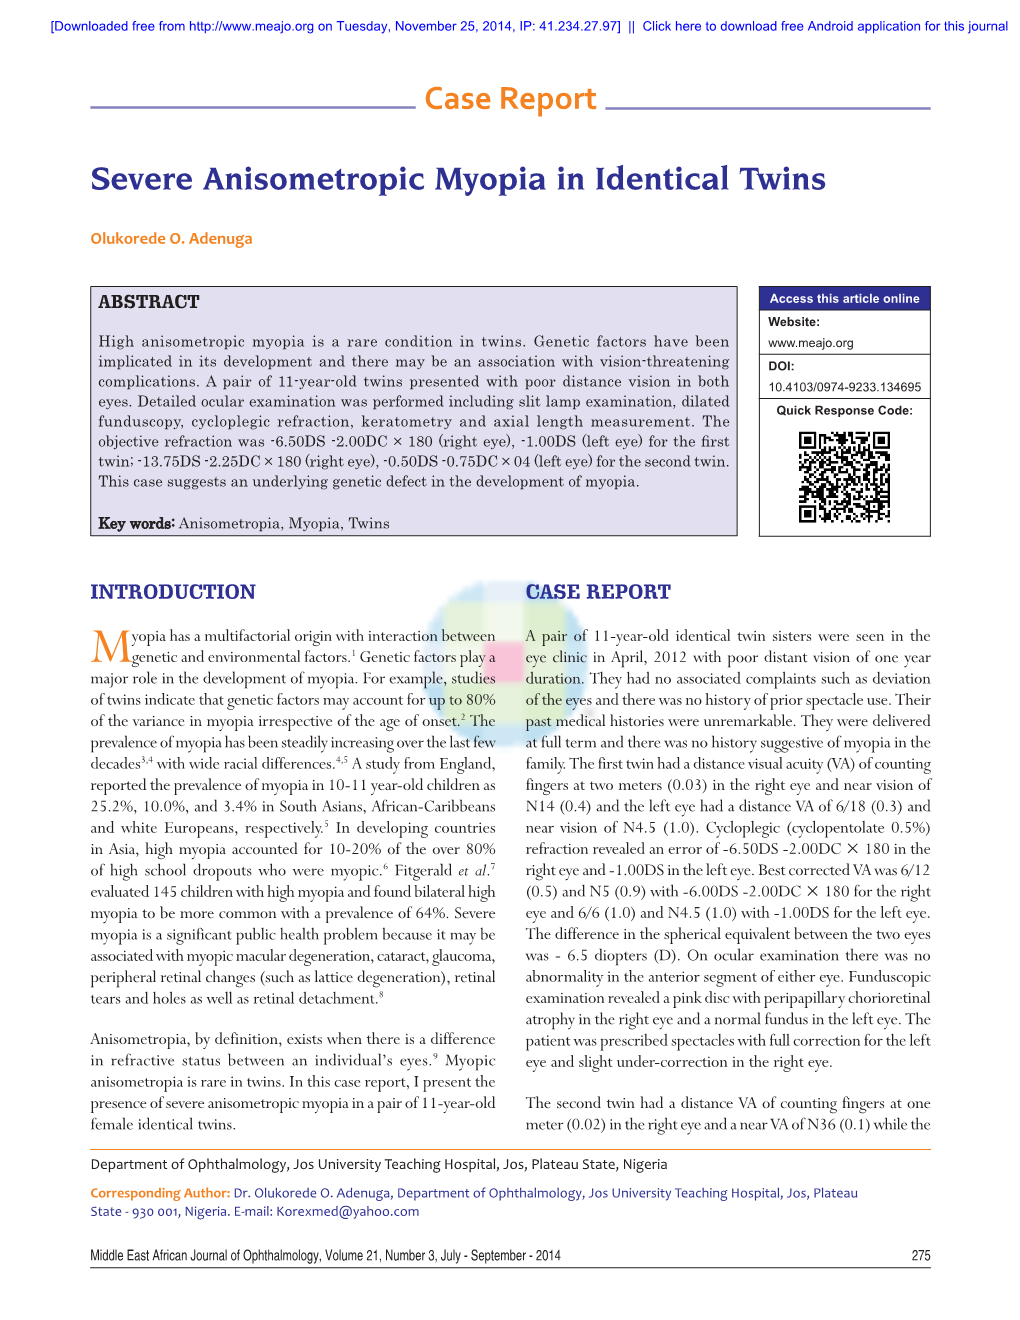 Severe Anisometropic Myopia in Identical Twins Case Report